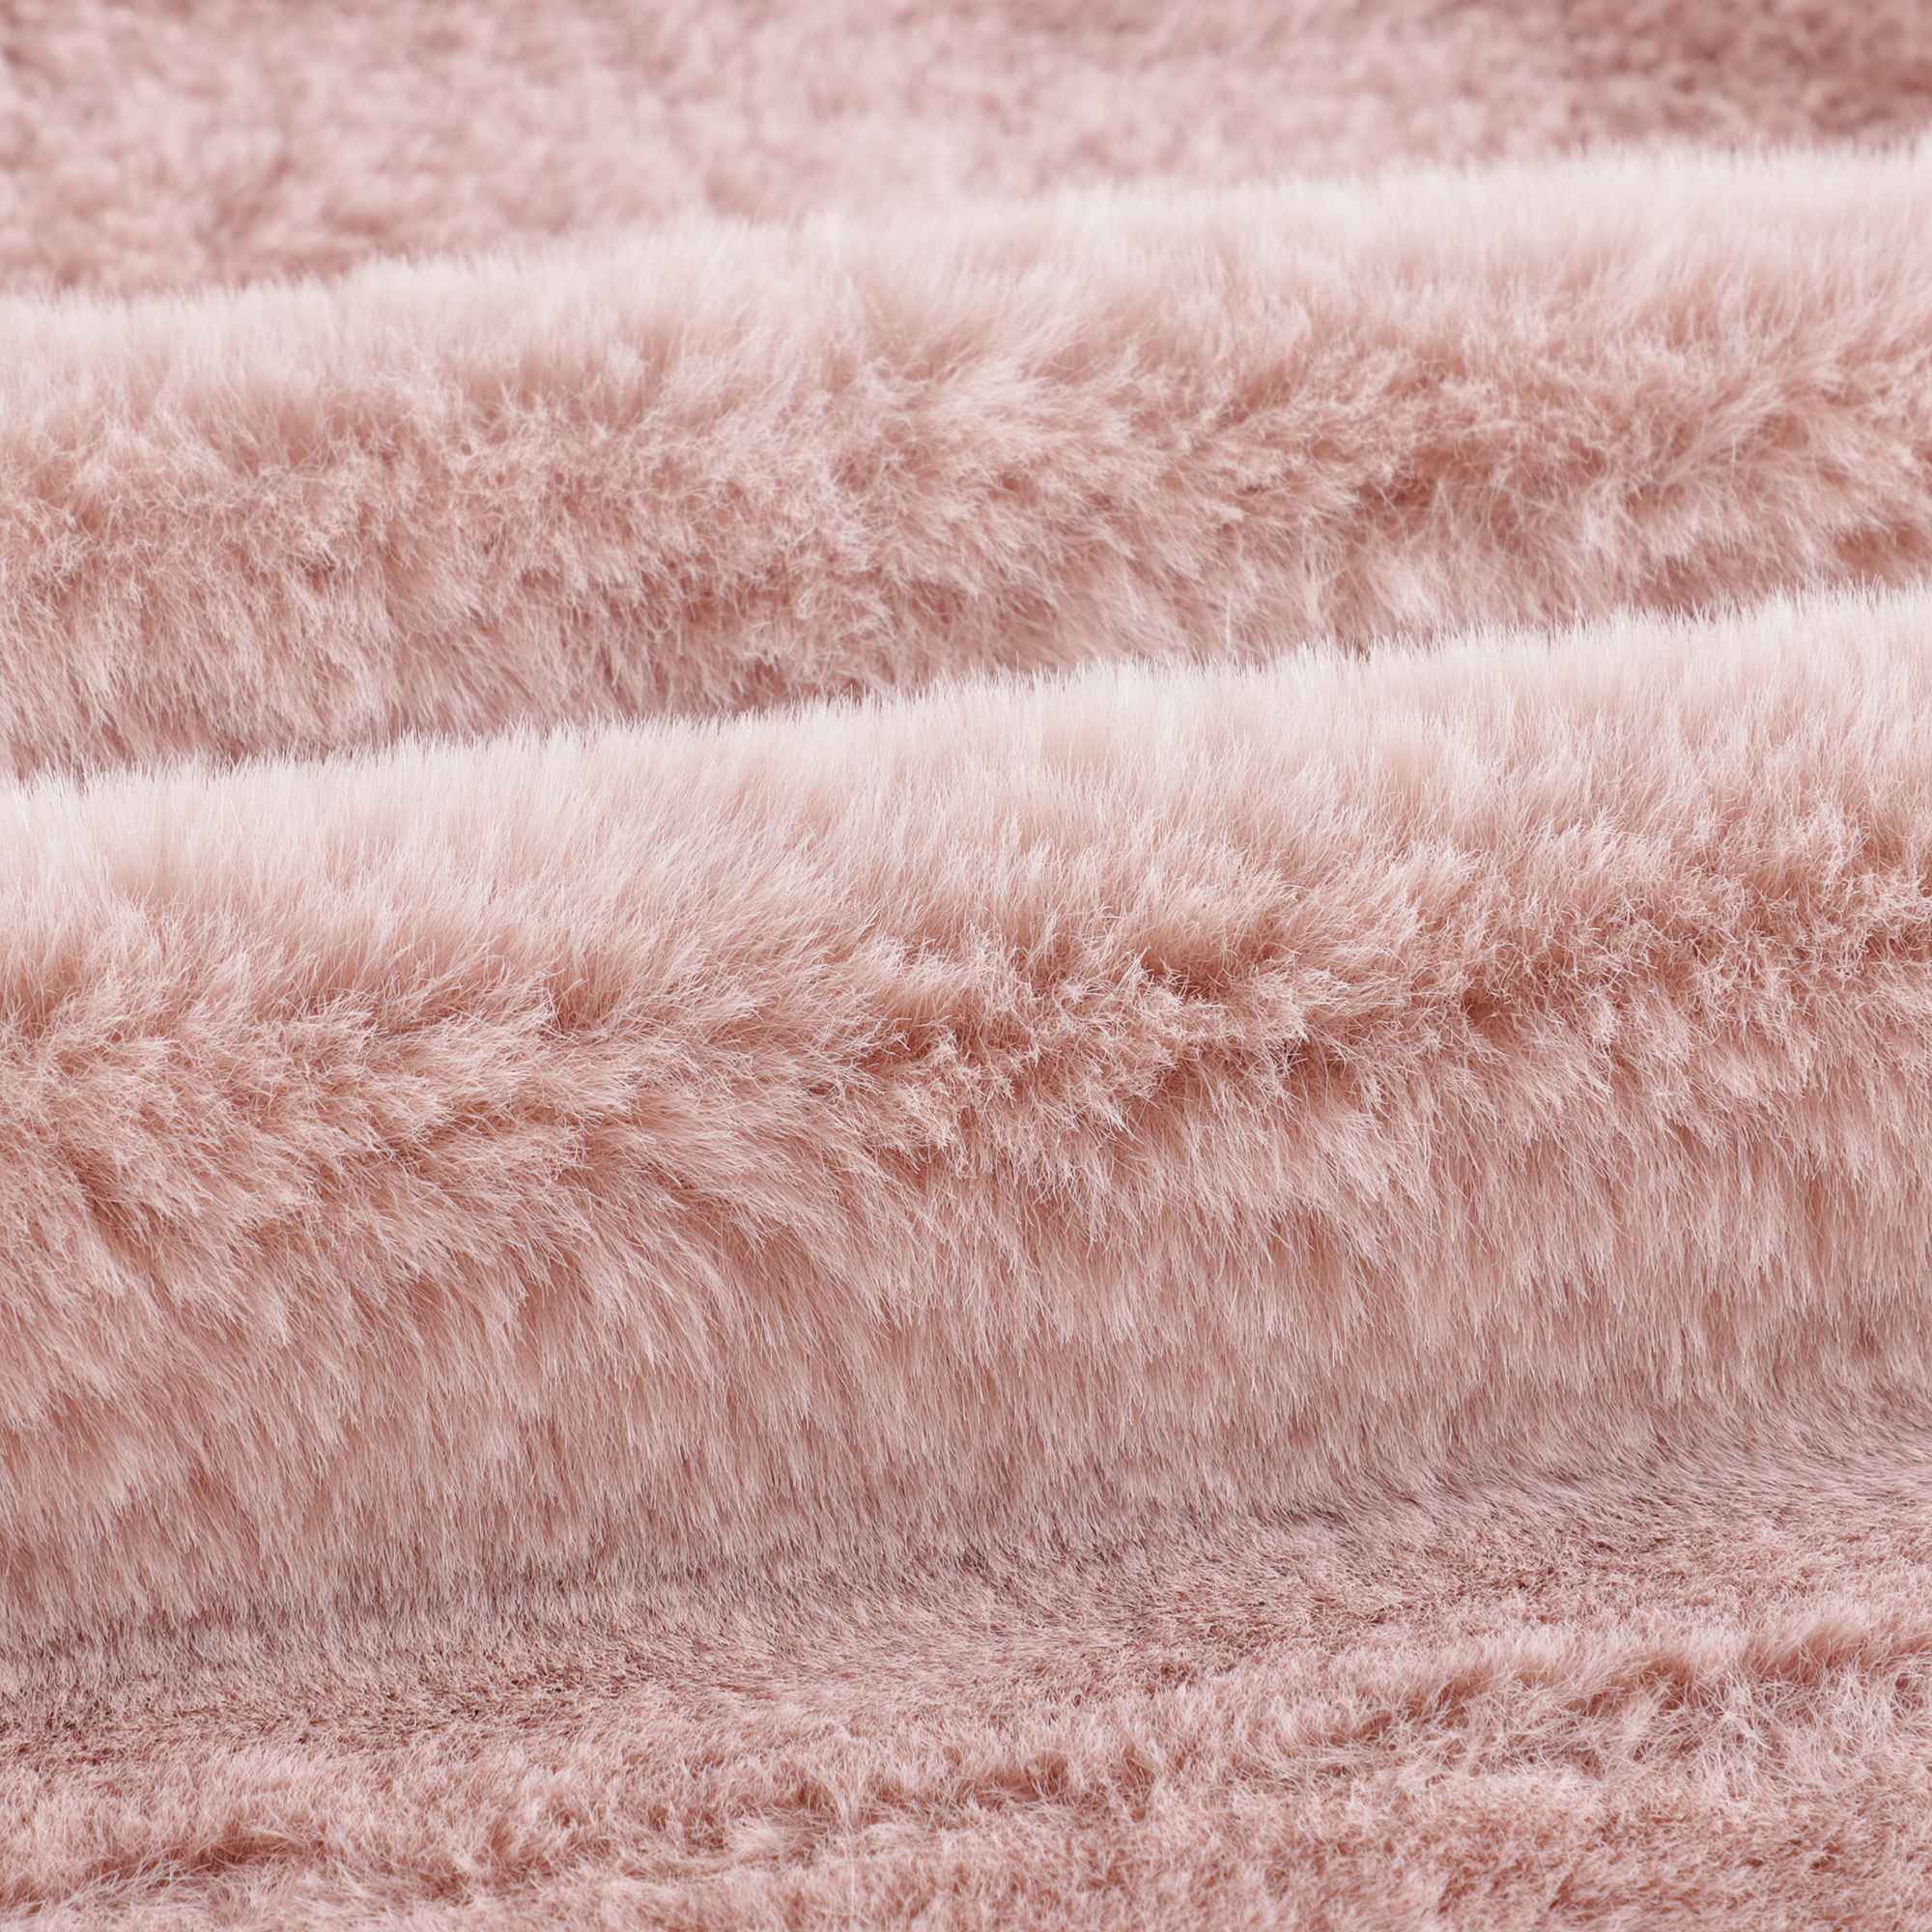 Girls Pink Padded Coat